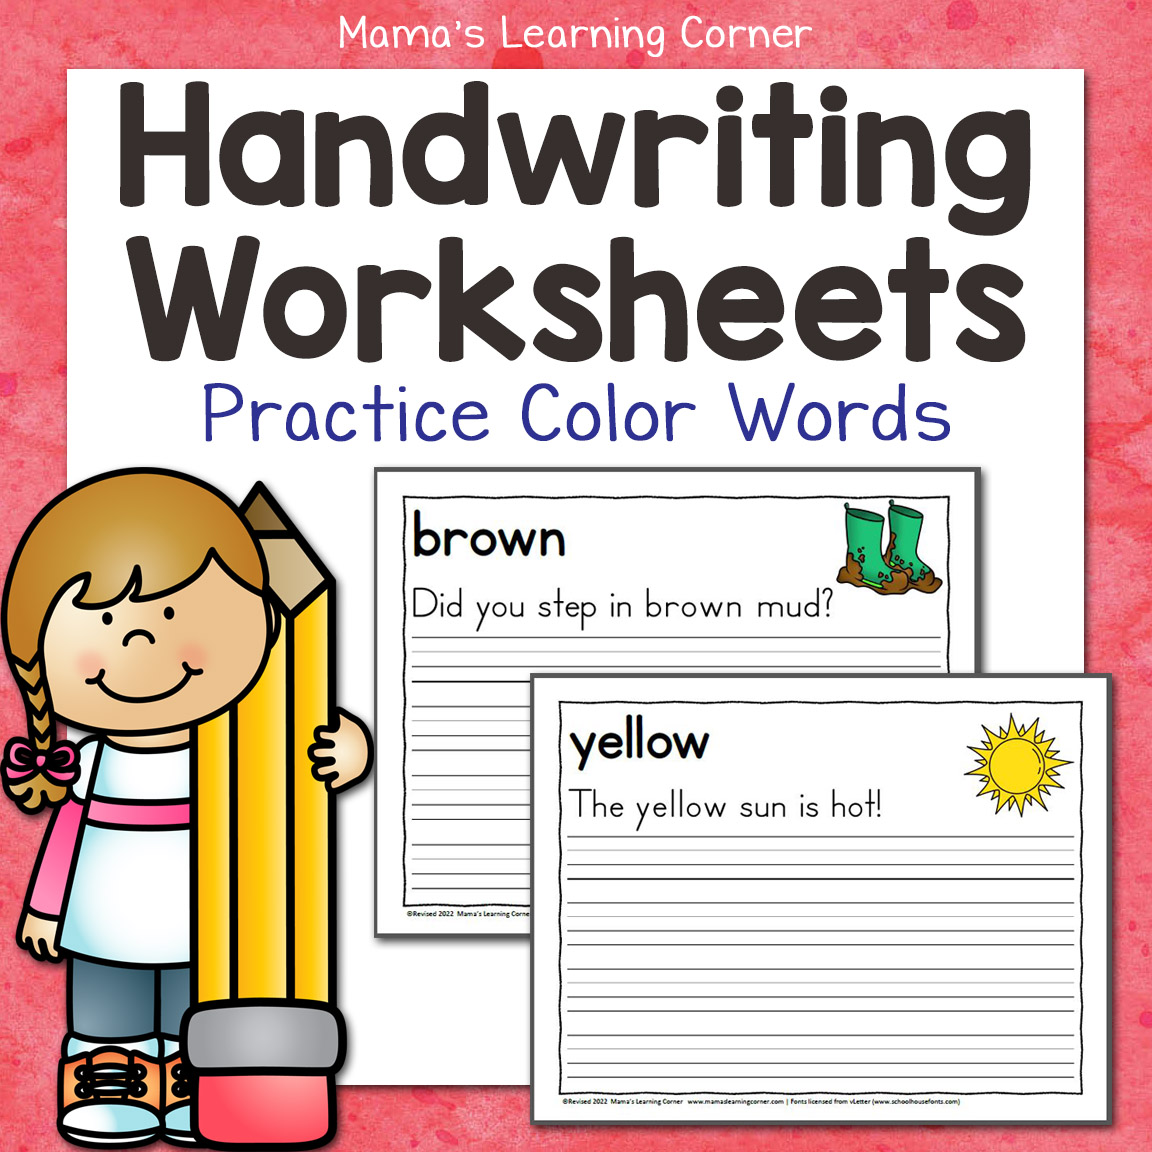 Color Word Sentences Handwriting Practice